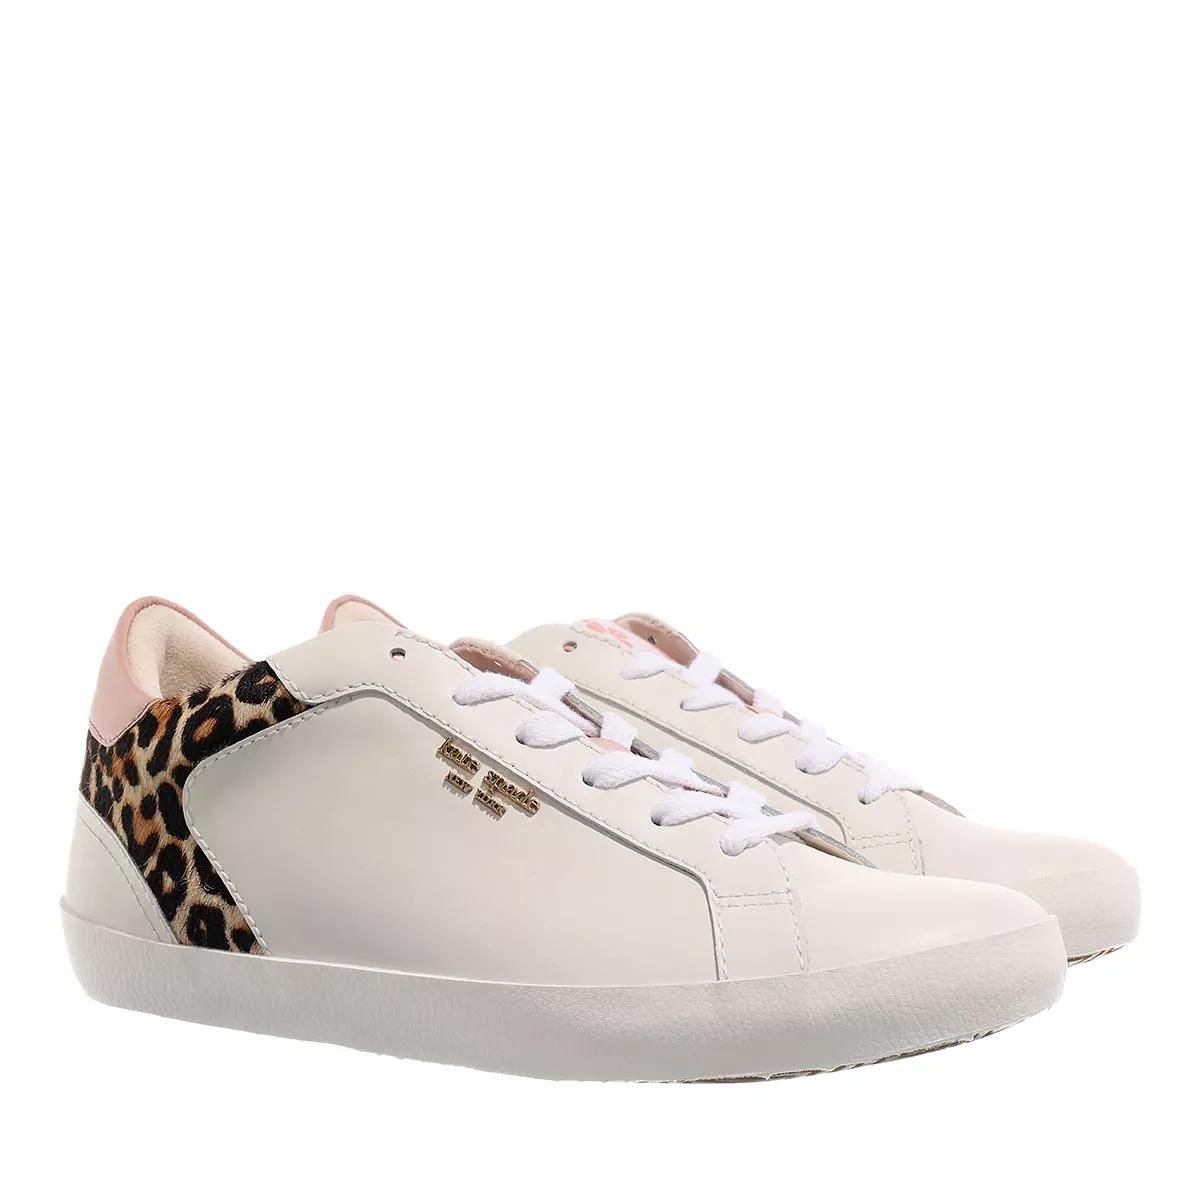 Kate Spade New York Sneakers - Ace - Gr. 36 (EU) - in Creme - für Damen von kate spade new york